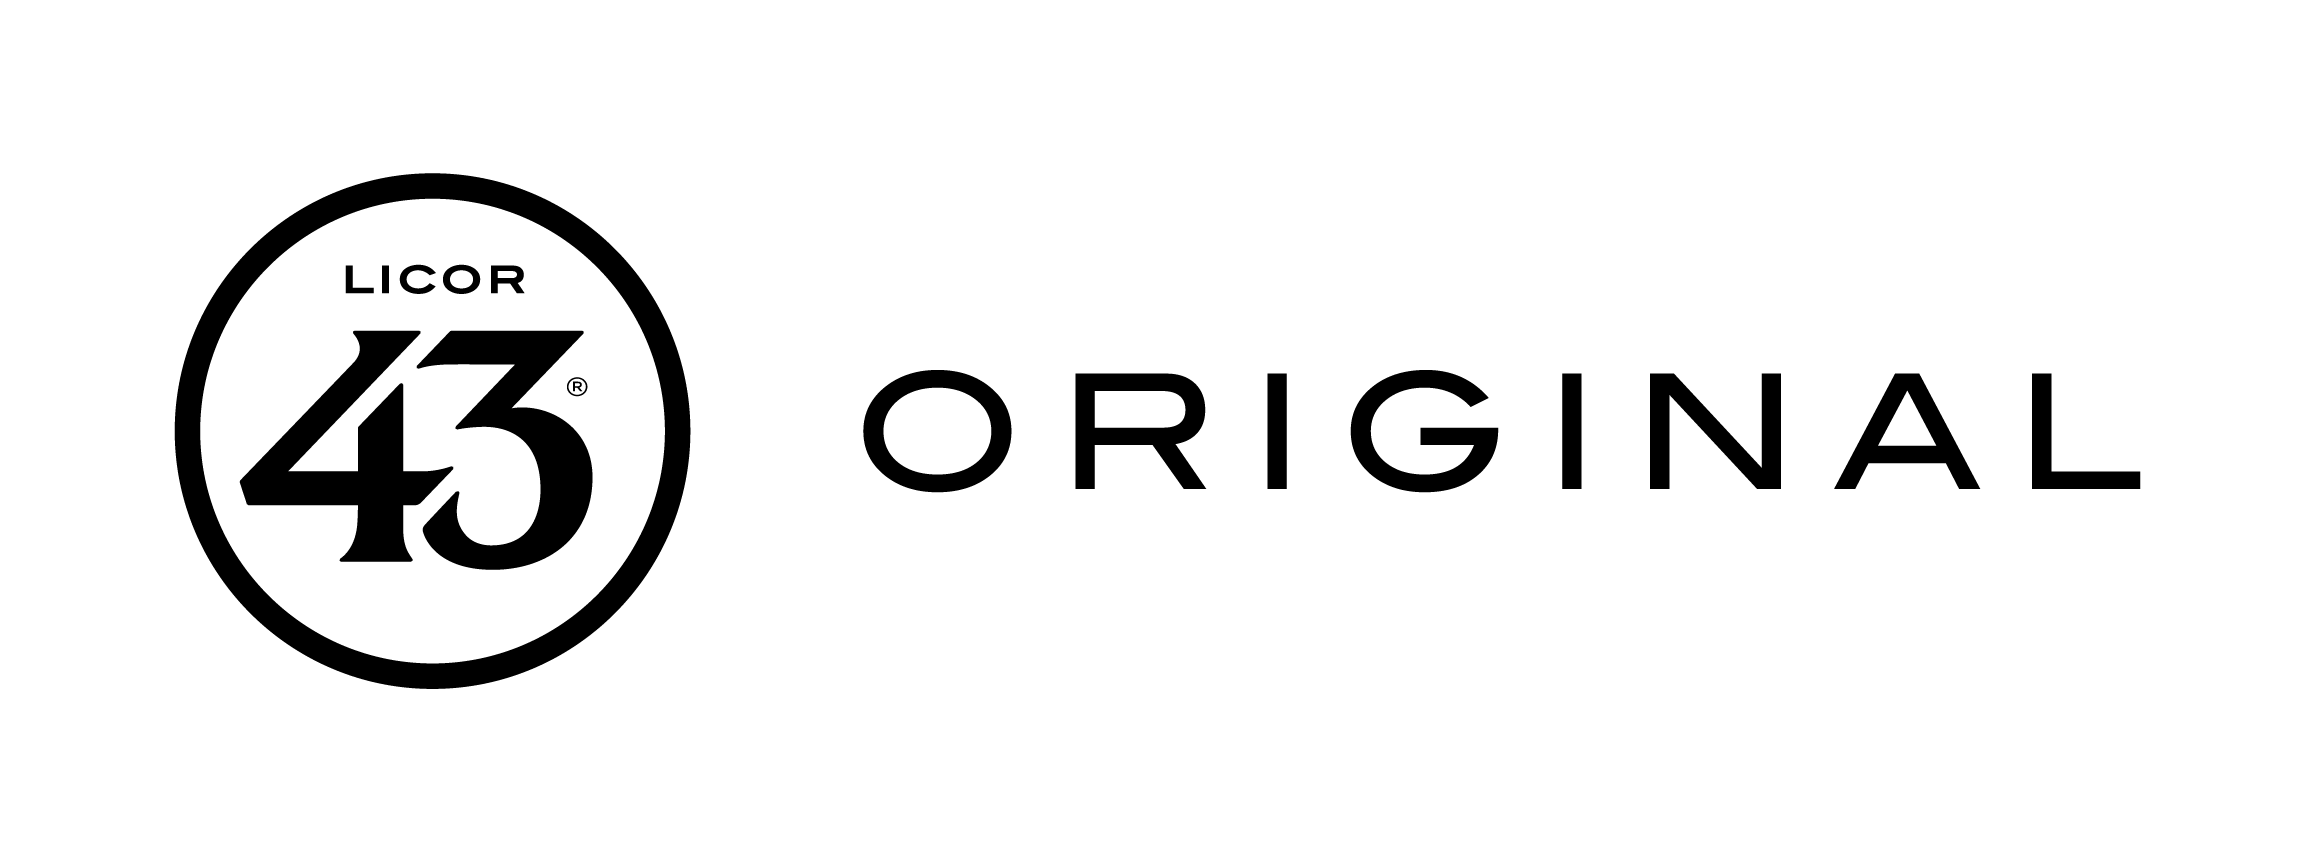 Licor 43 Original Logo - Black - Callyn Kammermeier.png